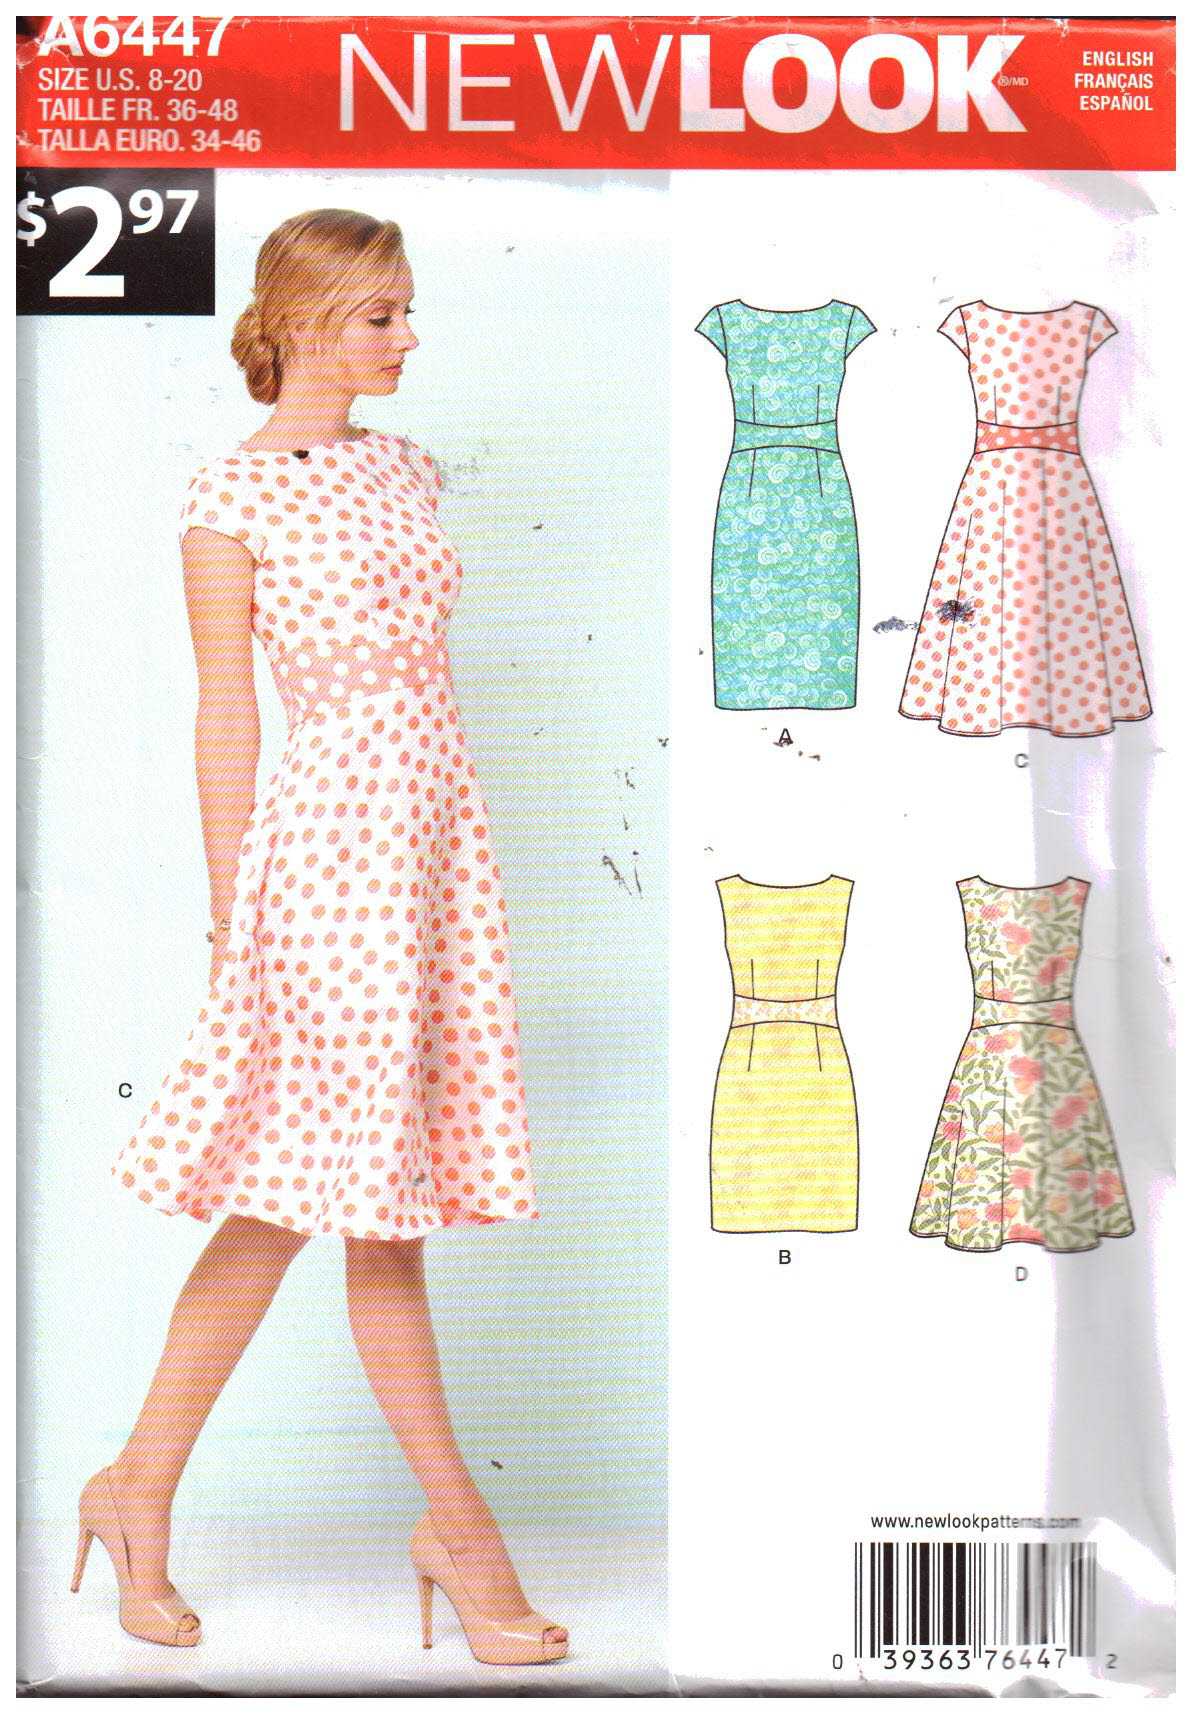 New Look A6447 Dress Size: 8-20 Uncut Sewing Pattern